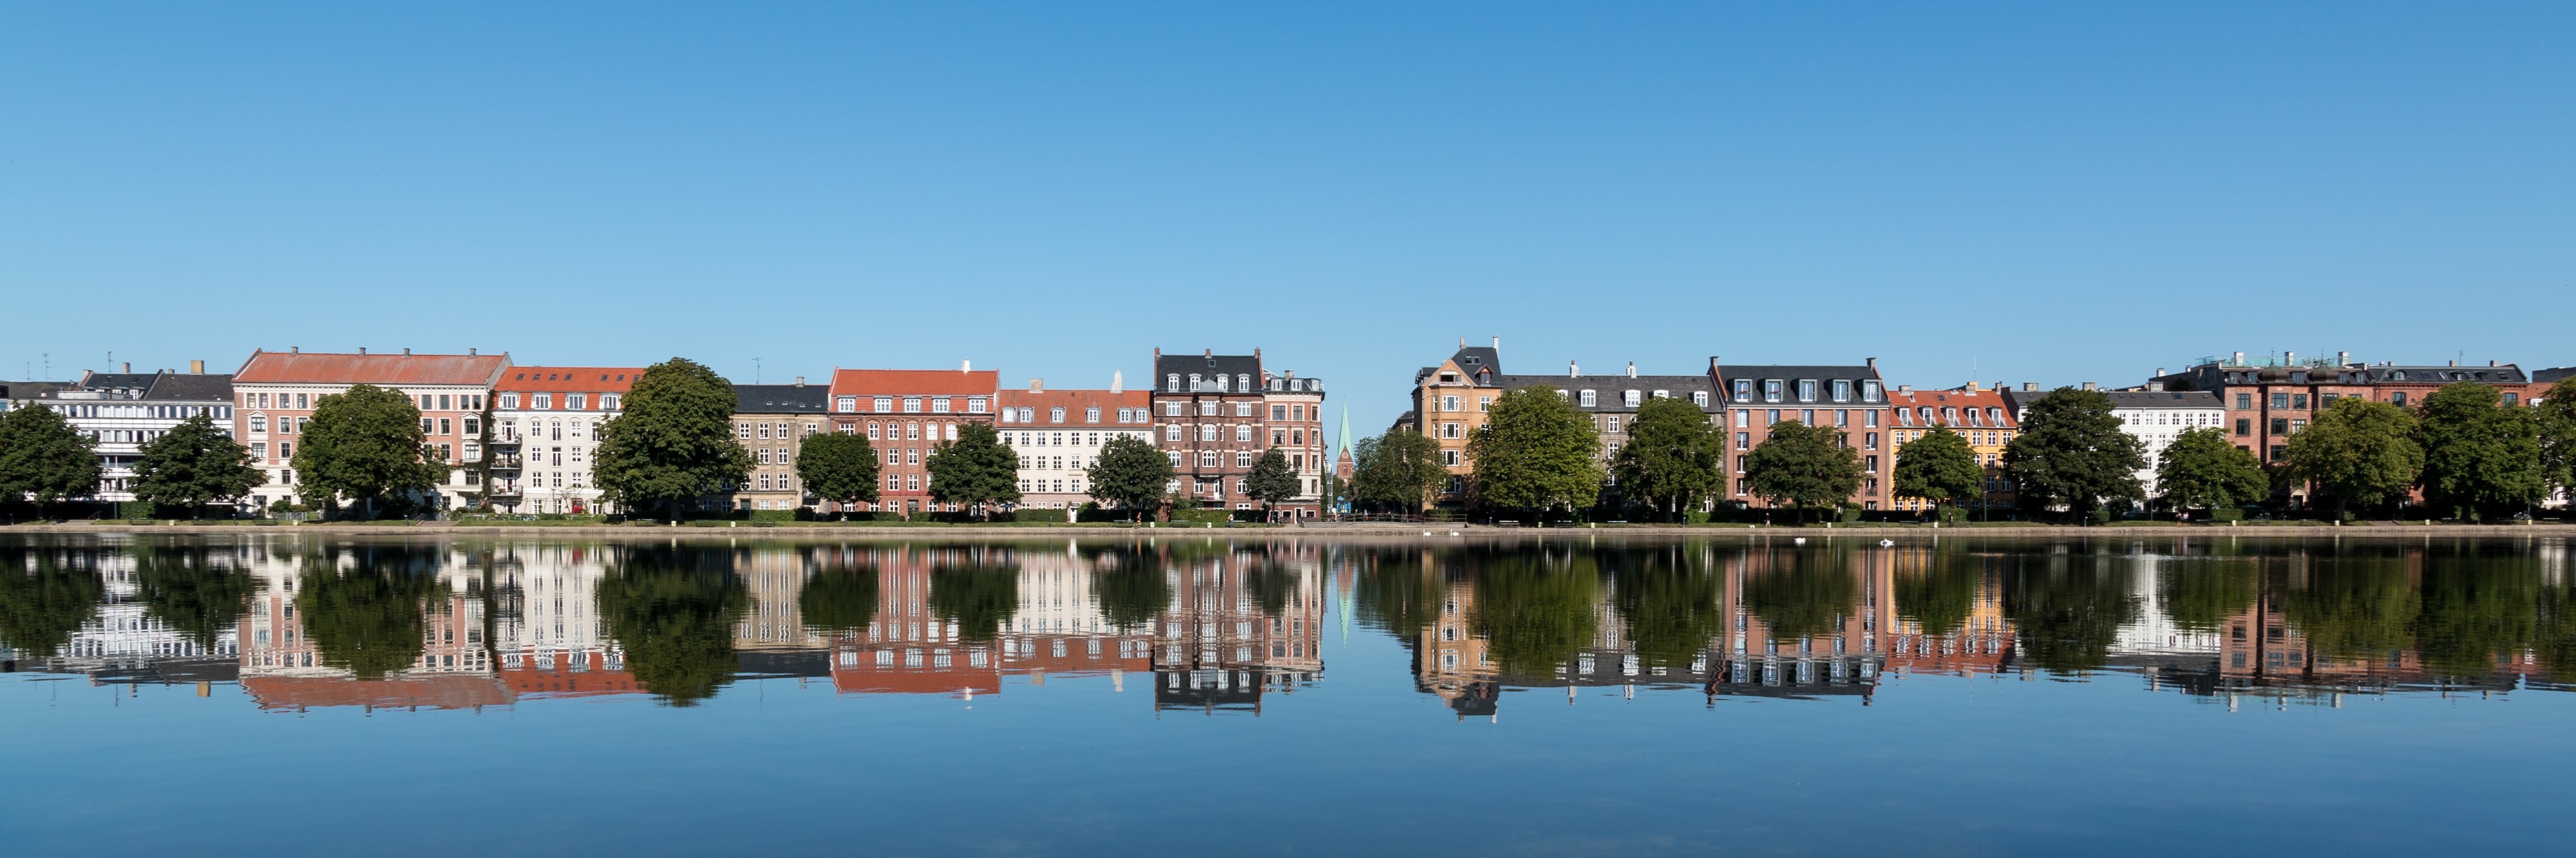 Kopenhagen (DK), Peblinge-See -- 2017 -- 1451